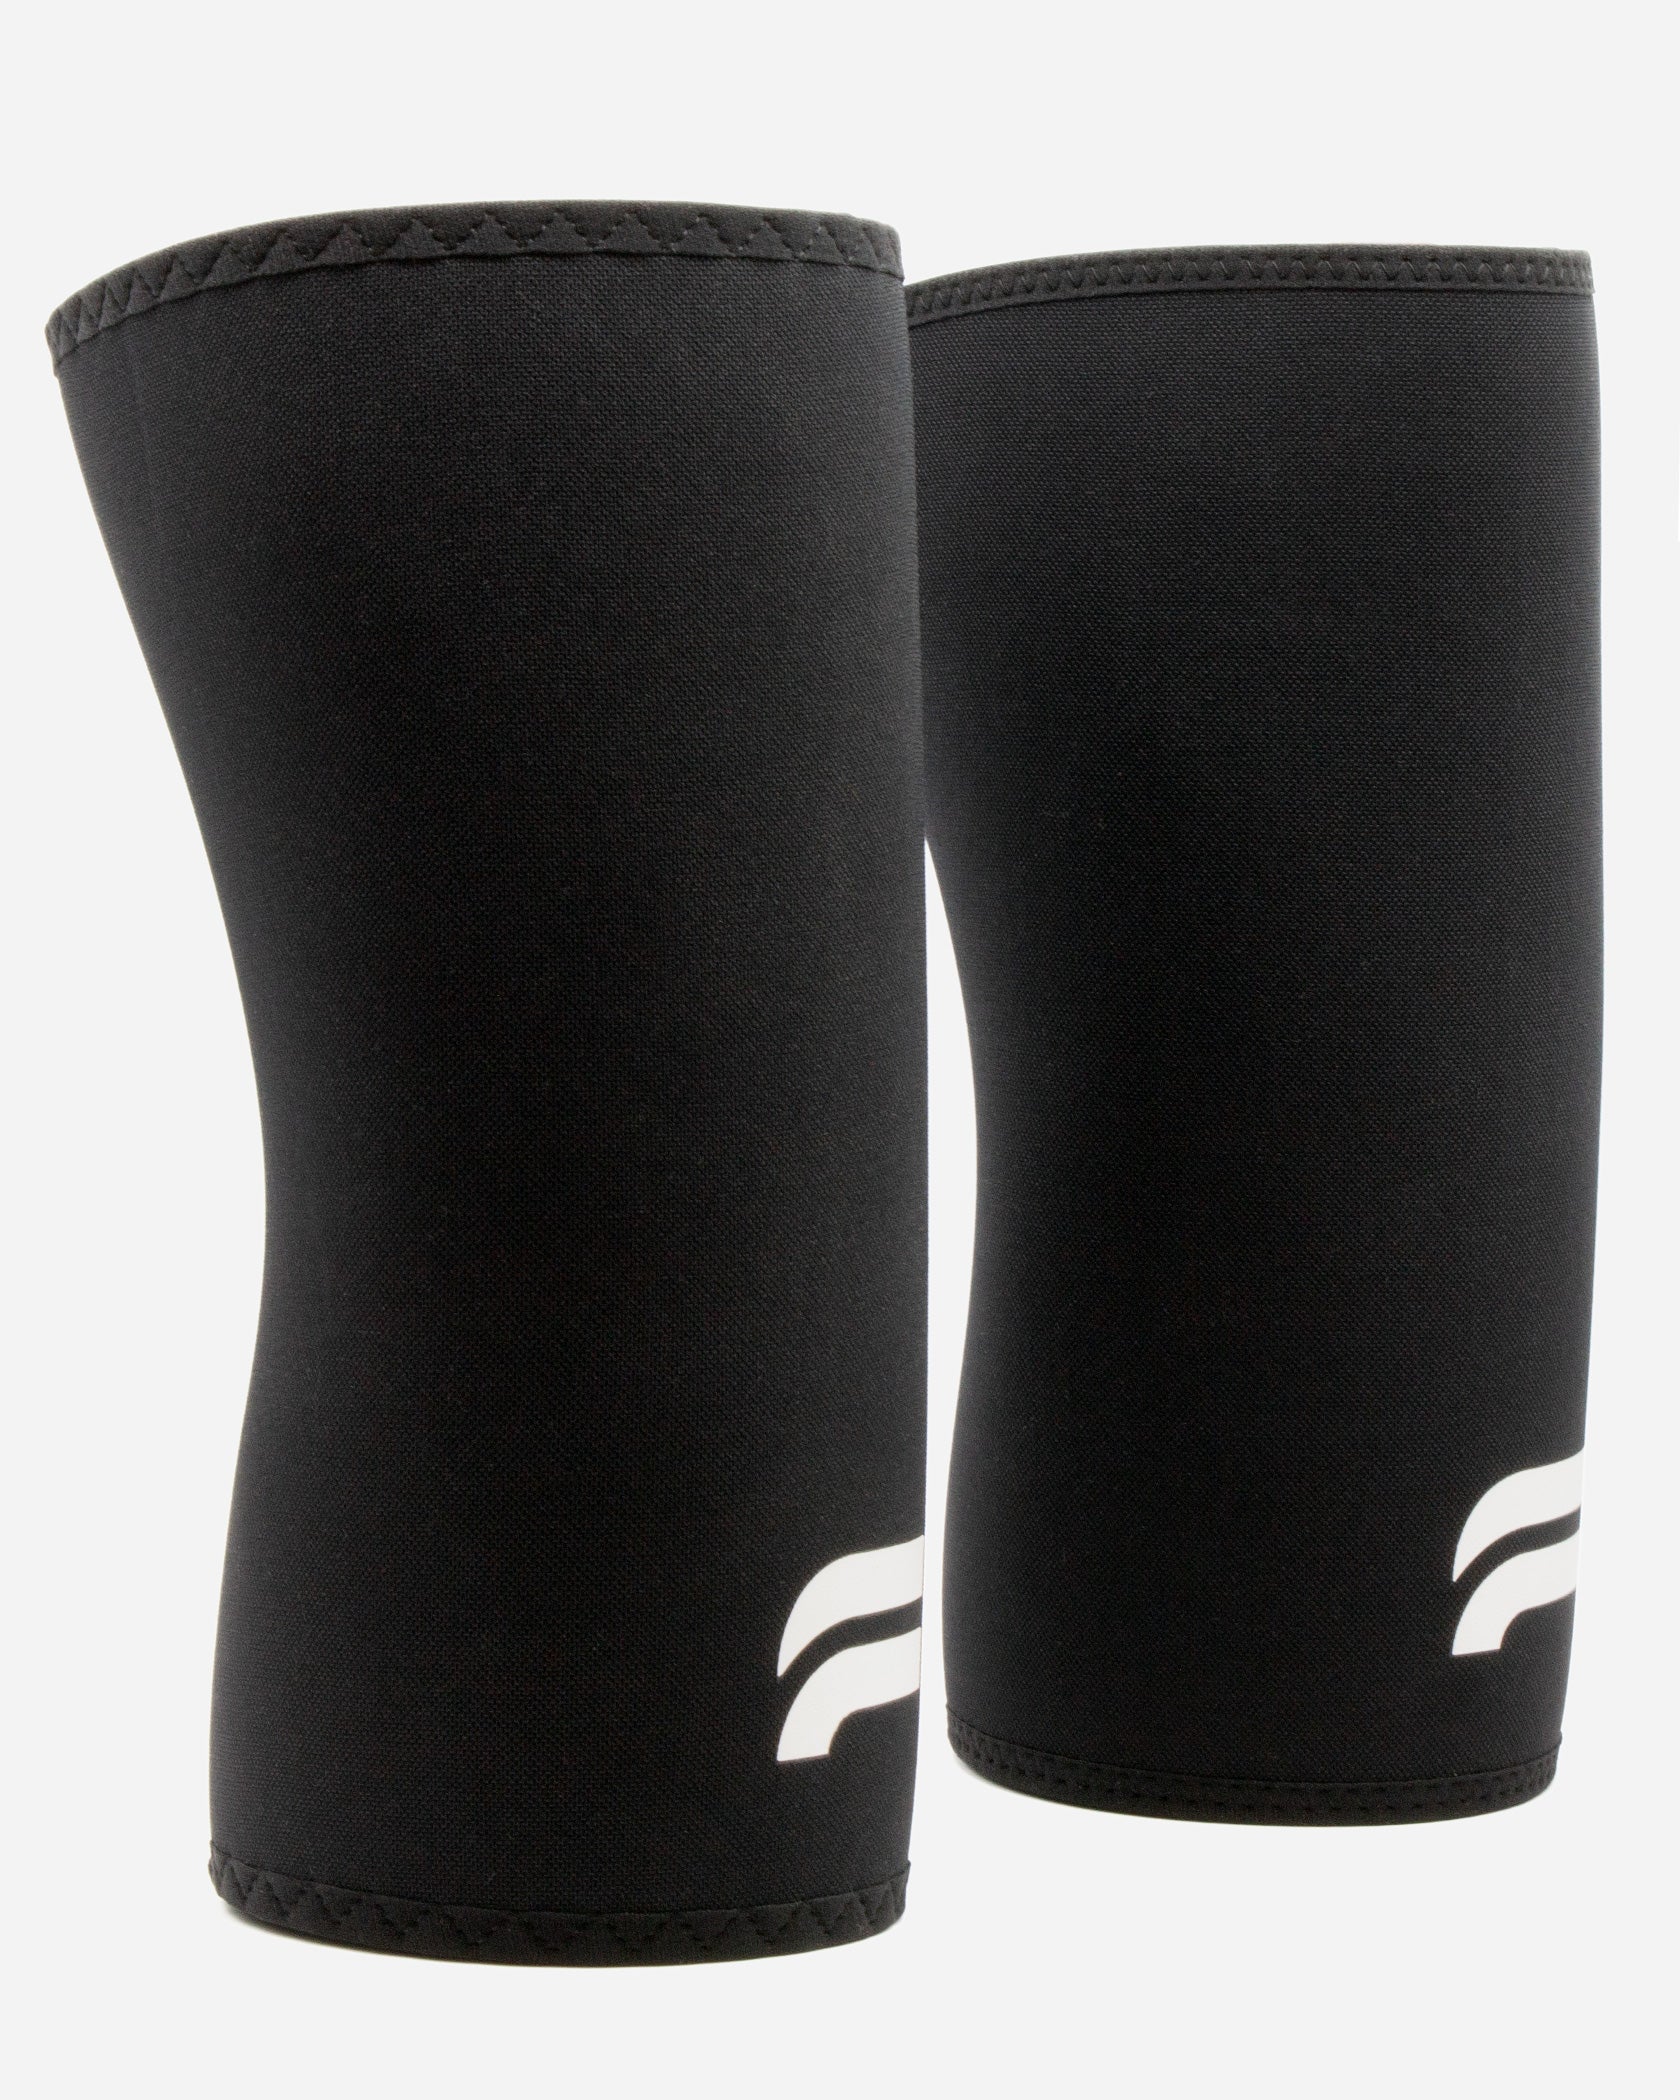 Knee Sleeves 7 mm - Extra Stiff - Black